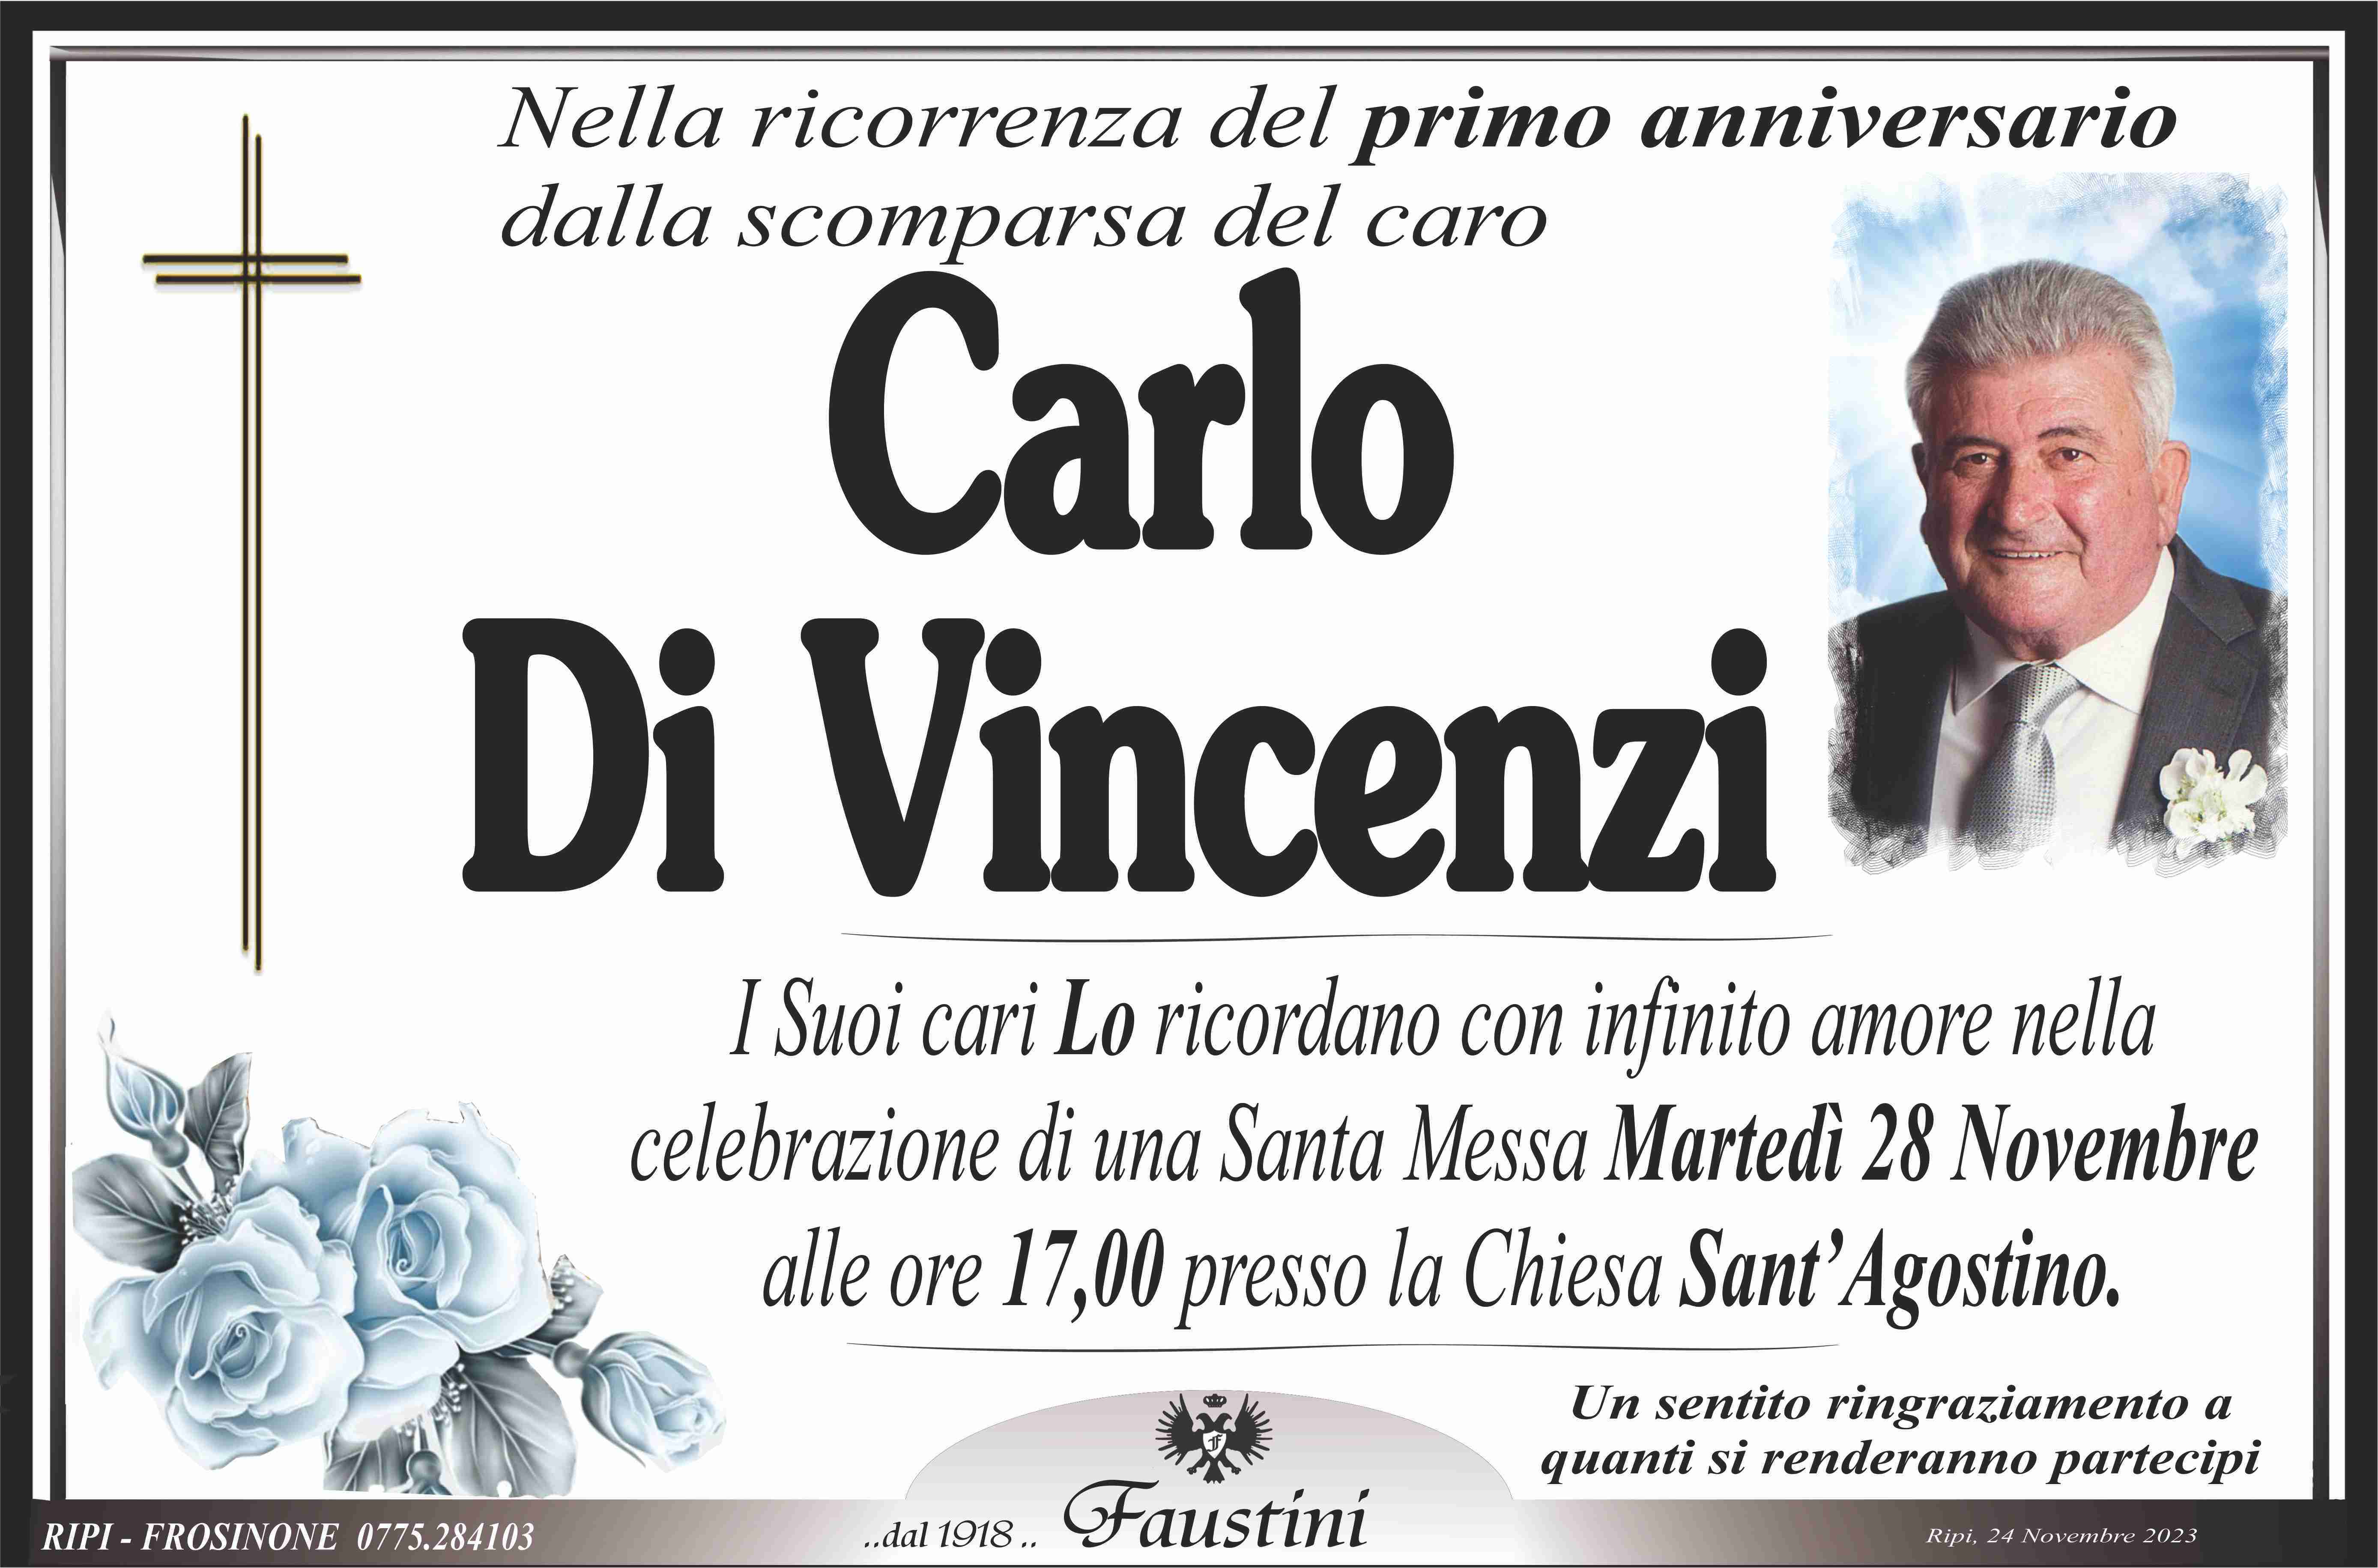 Carlo Di Vincenzi